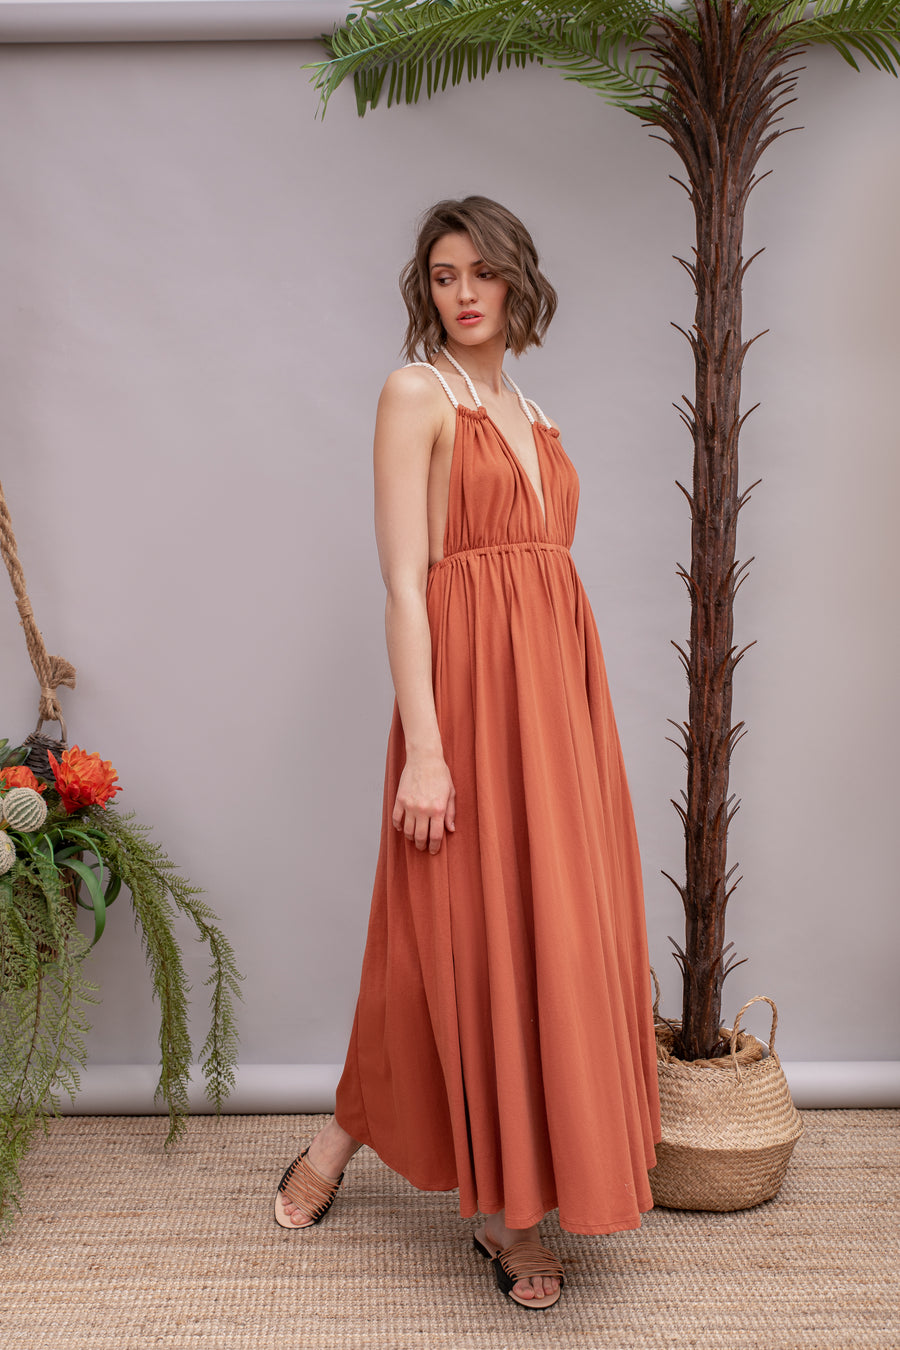 Daiquiri Terracotta Dress